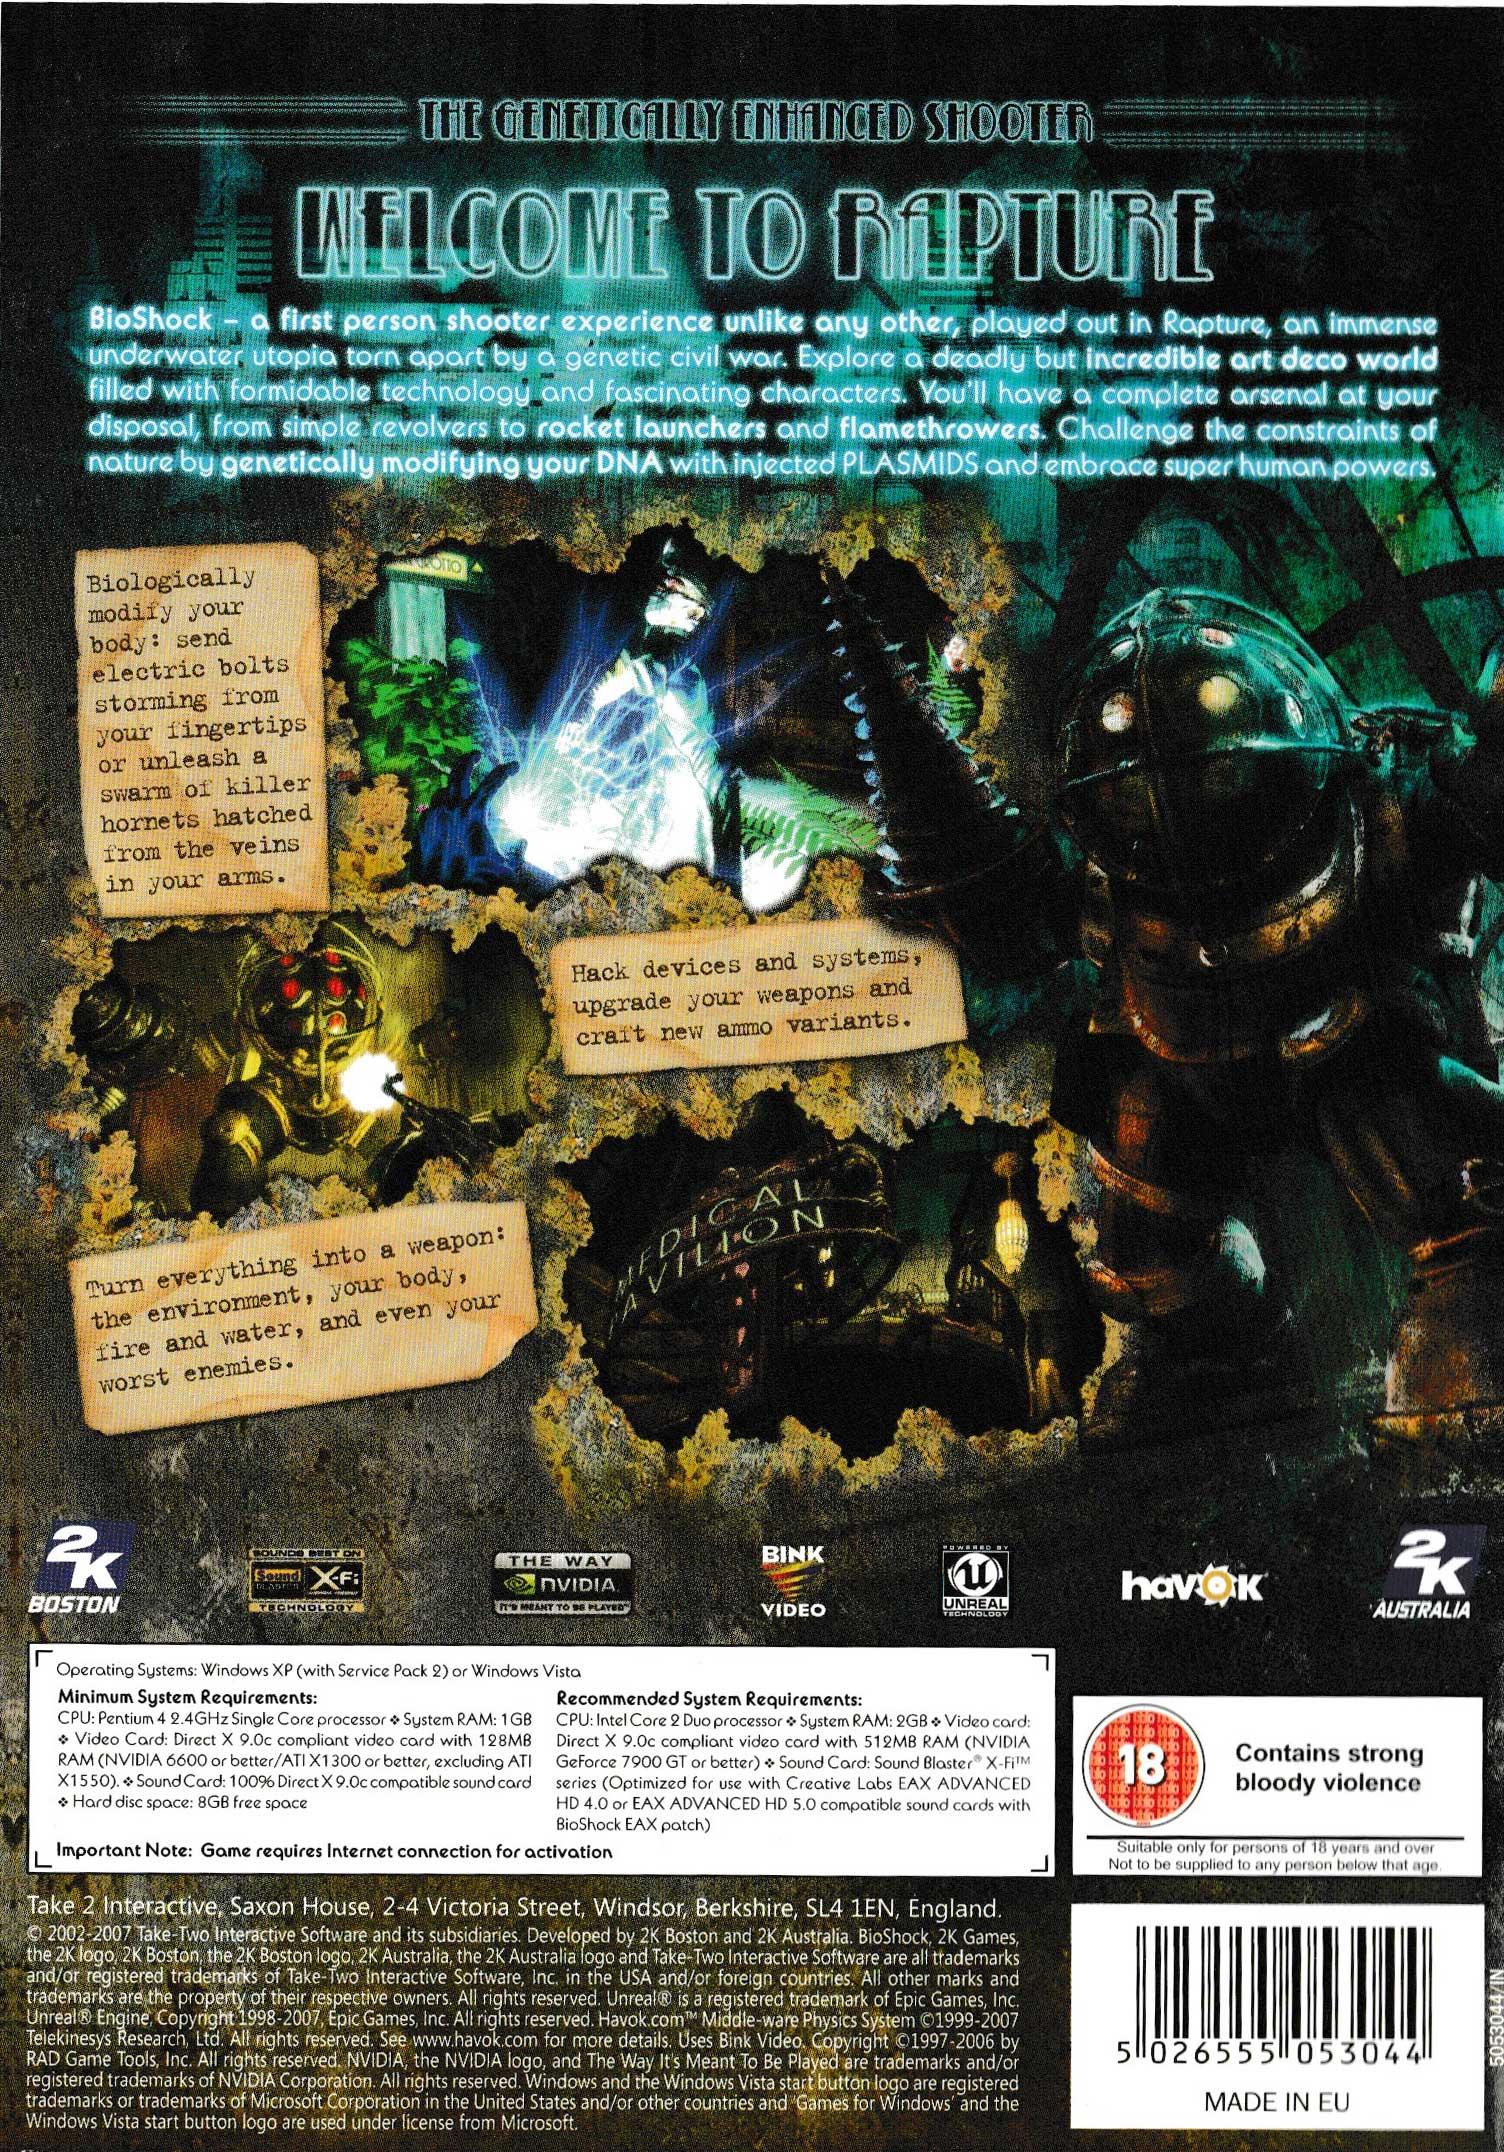 Games For Windows Bioshock - Classic Windows PC Game